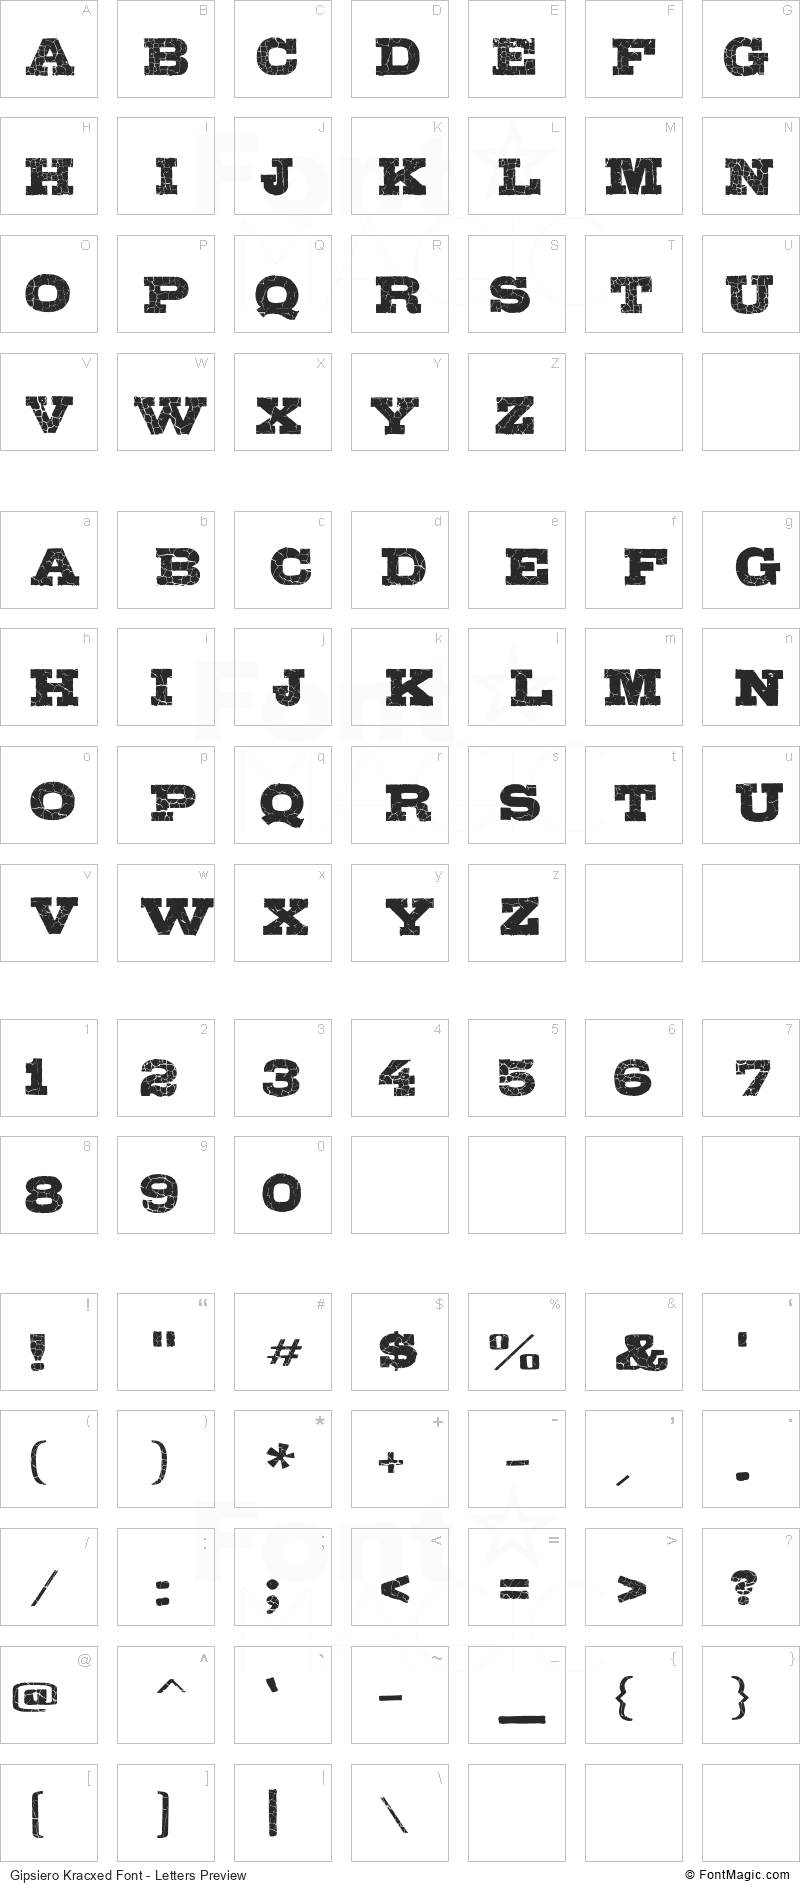 Gipsiero Kracxed Font - All Latters Preview Chart